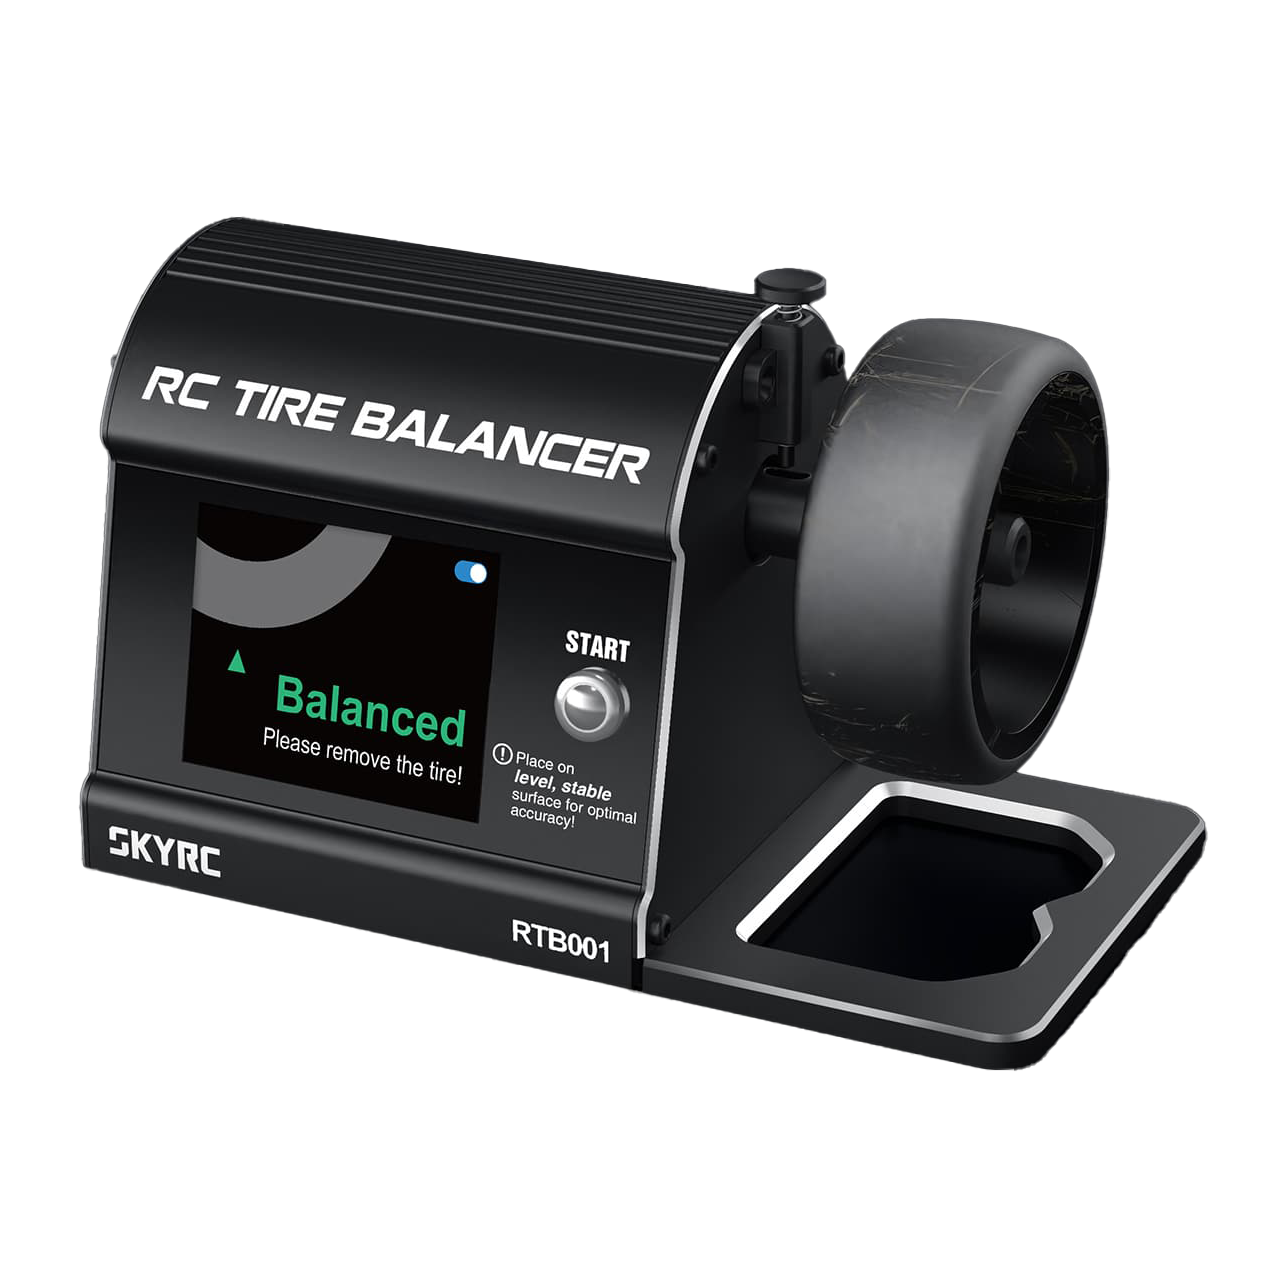 SKYRC Precision RC Tire Balancer for RC Cars and Trucks